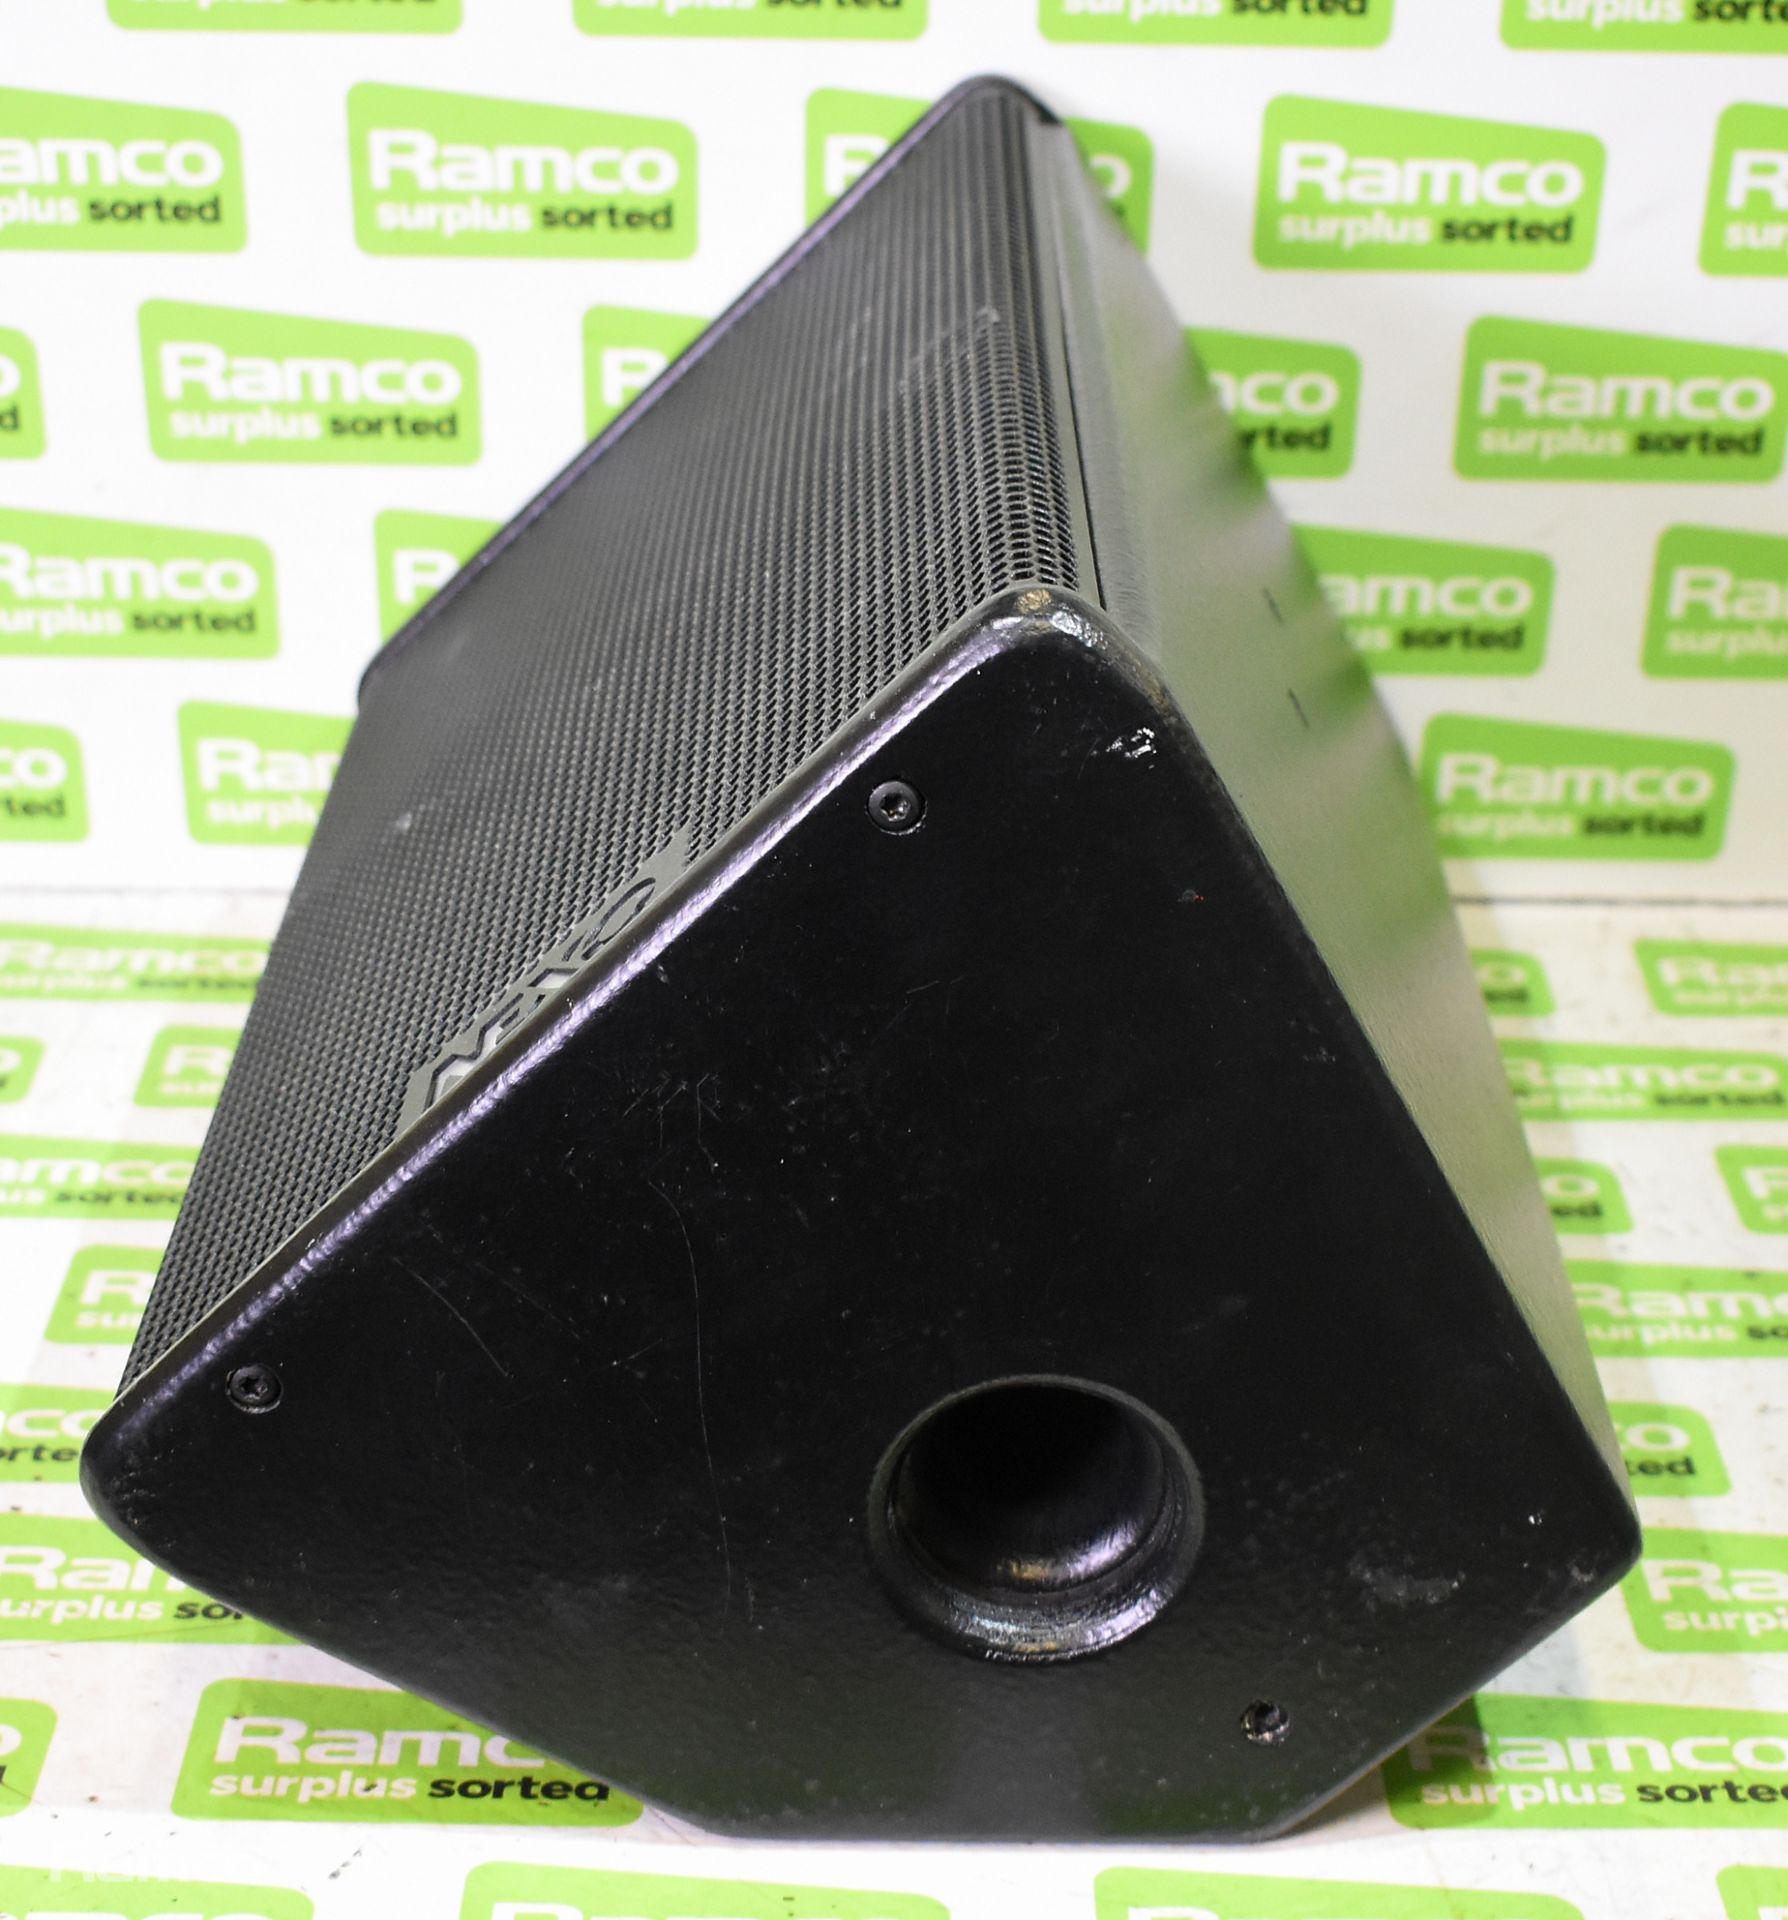 NEXO PS.8U - High power 2-way compact speaker - W 250 x D 220 x H 410 mm - Image 6 of 6